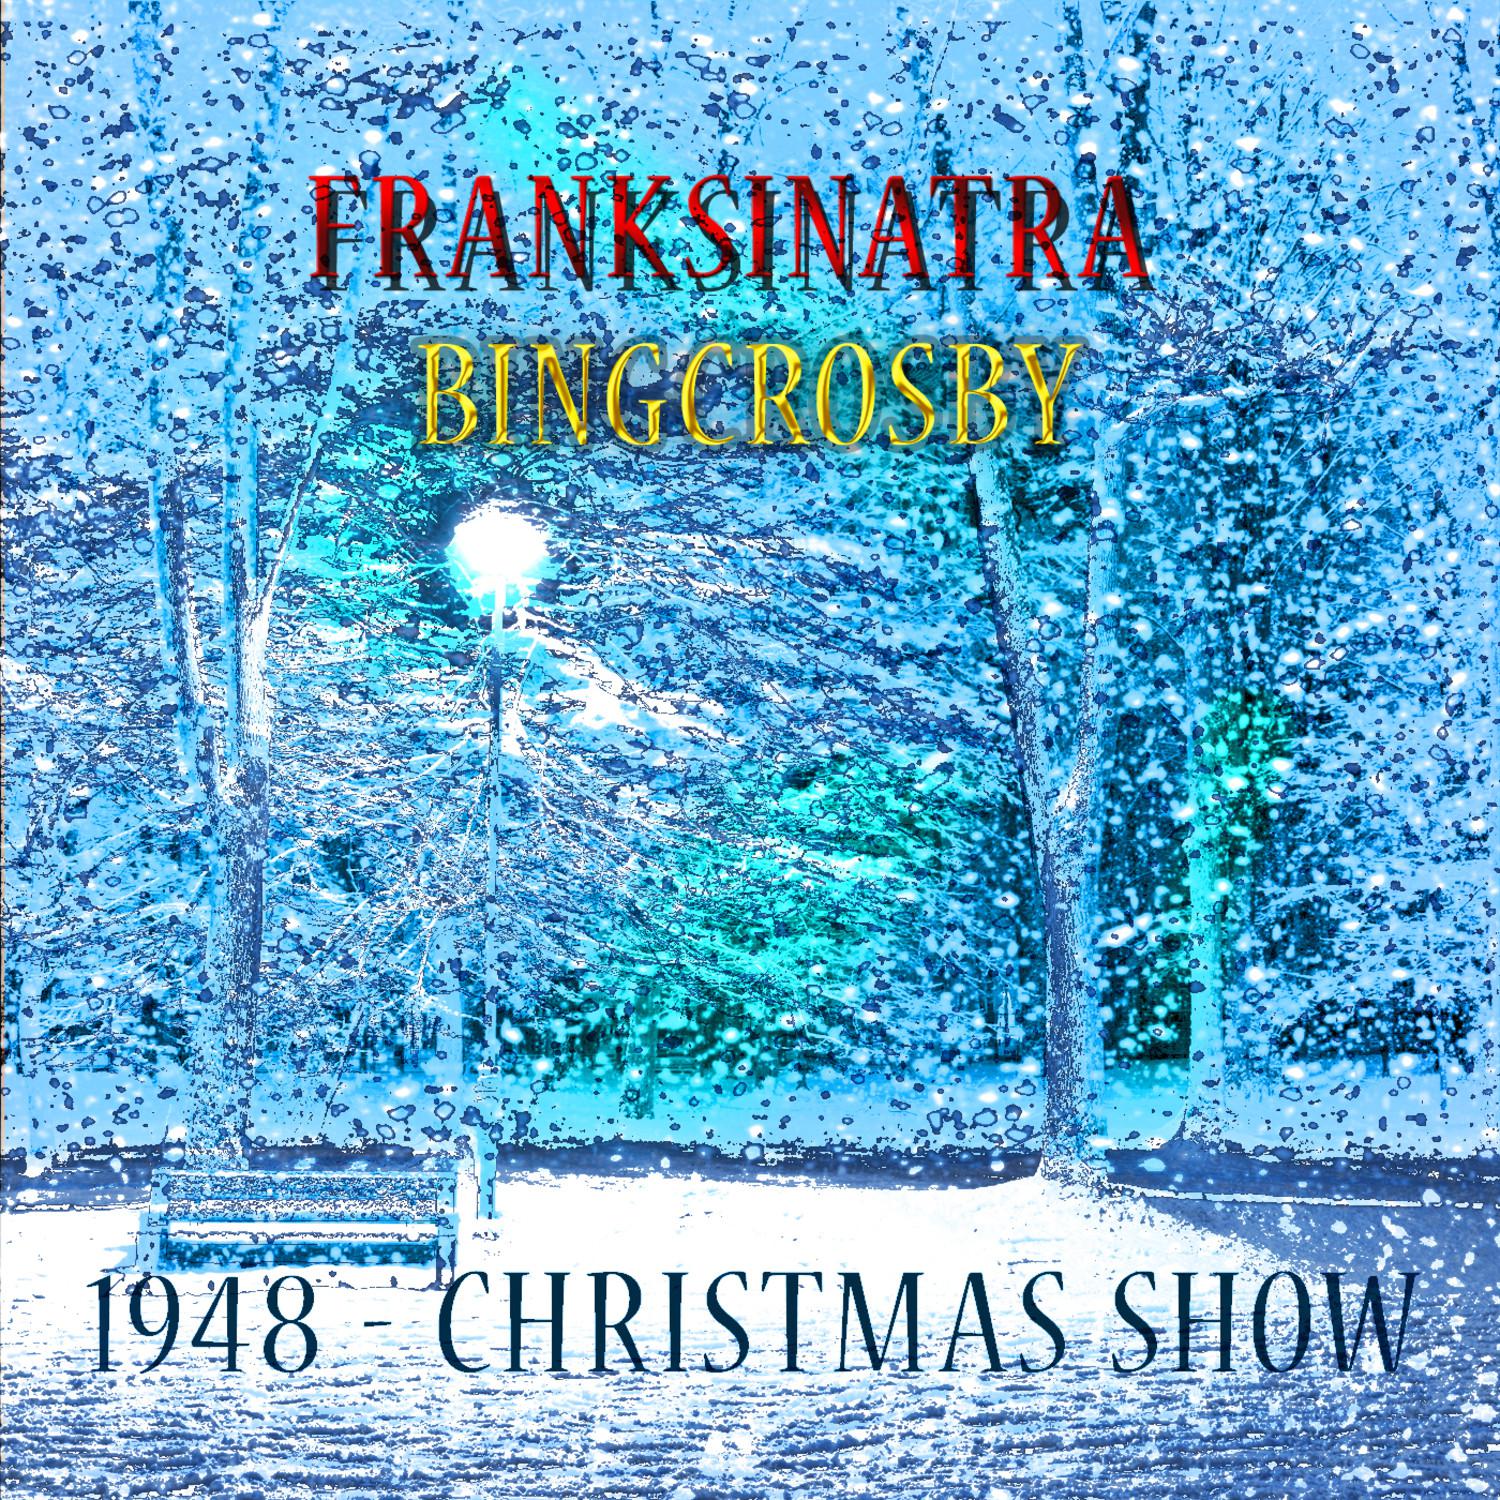 Hollywood Radio - 1948 Christmas Show - Frank Sinatra & Bing Crosby (Digitally Remastered)